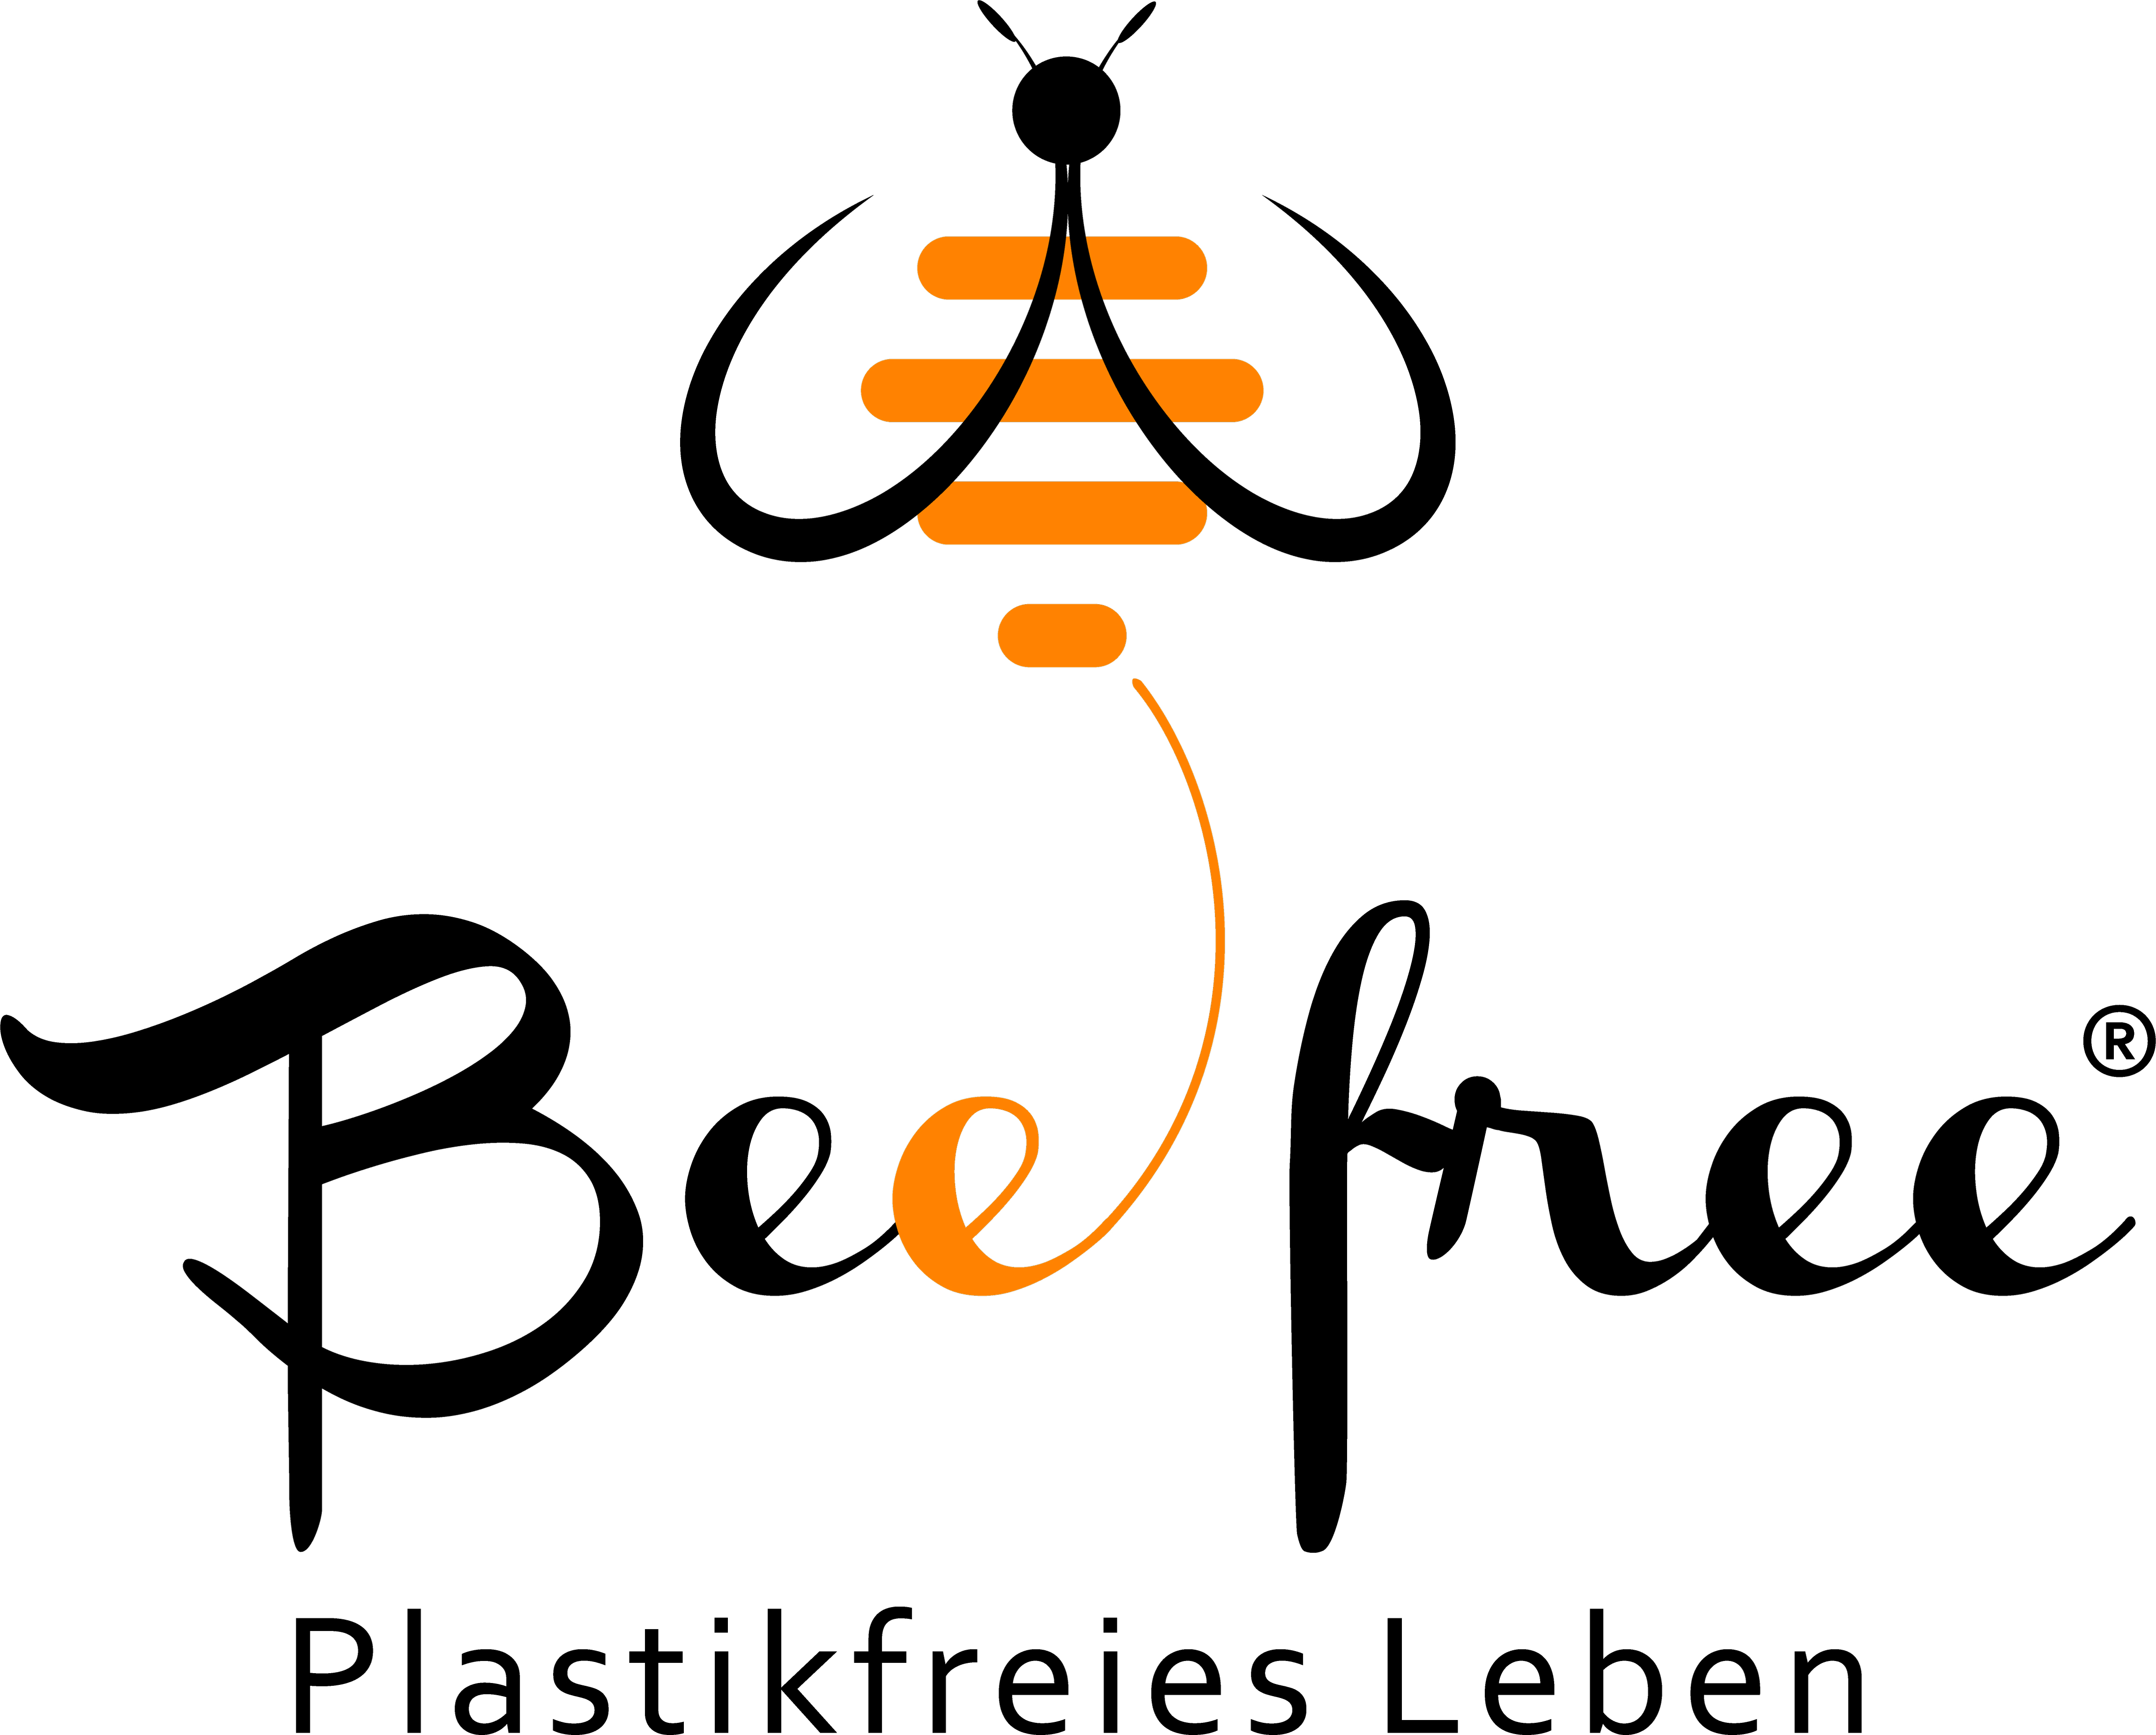 Beefree-Plastikfreies Leben